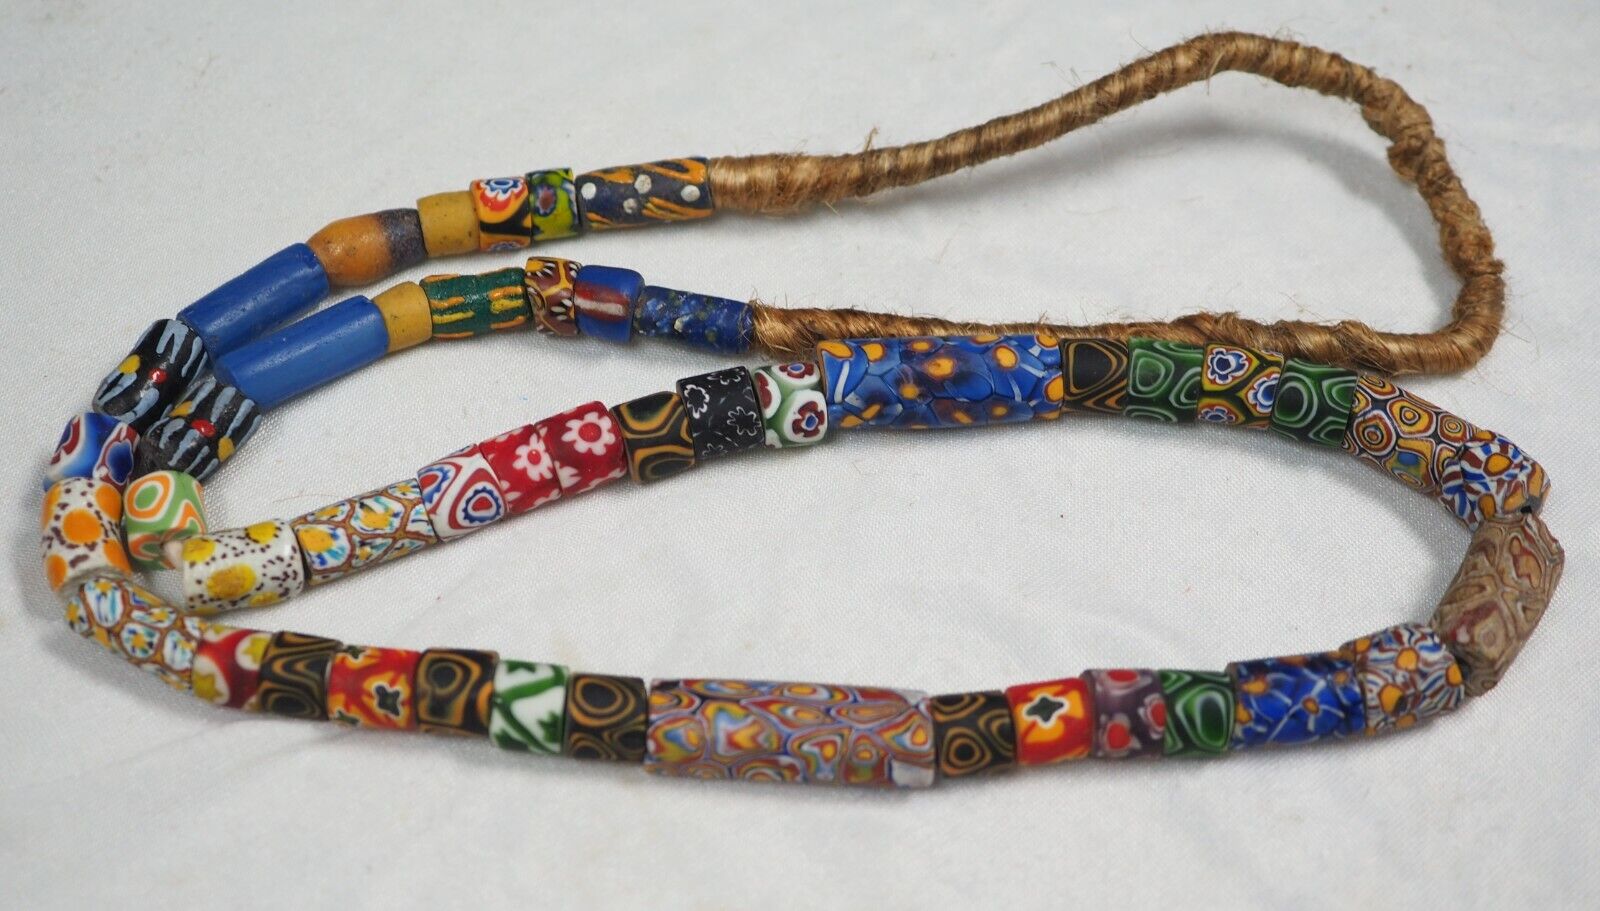 Antique African Trade Millefiori Venetian Beads Collectible Trade Bead Necklace